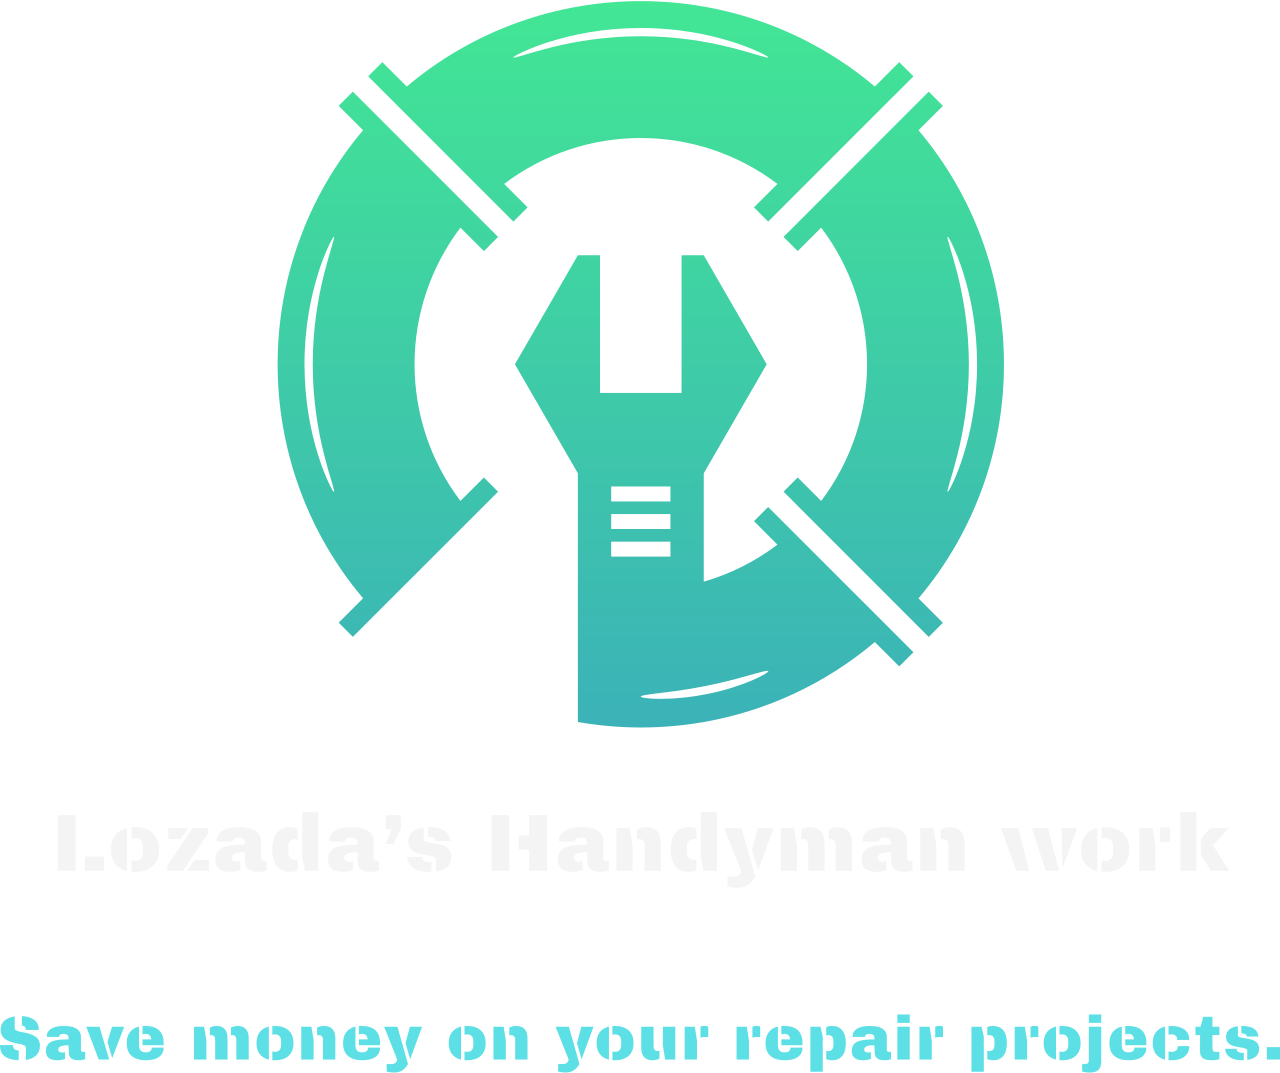 Lozada’s Handyman work's logo